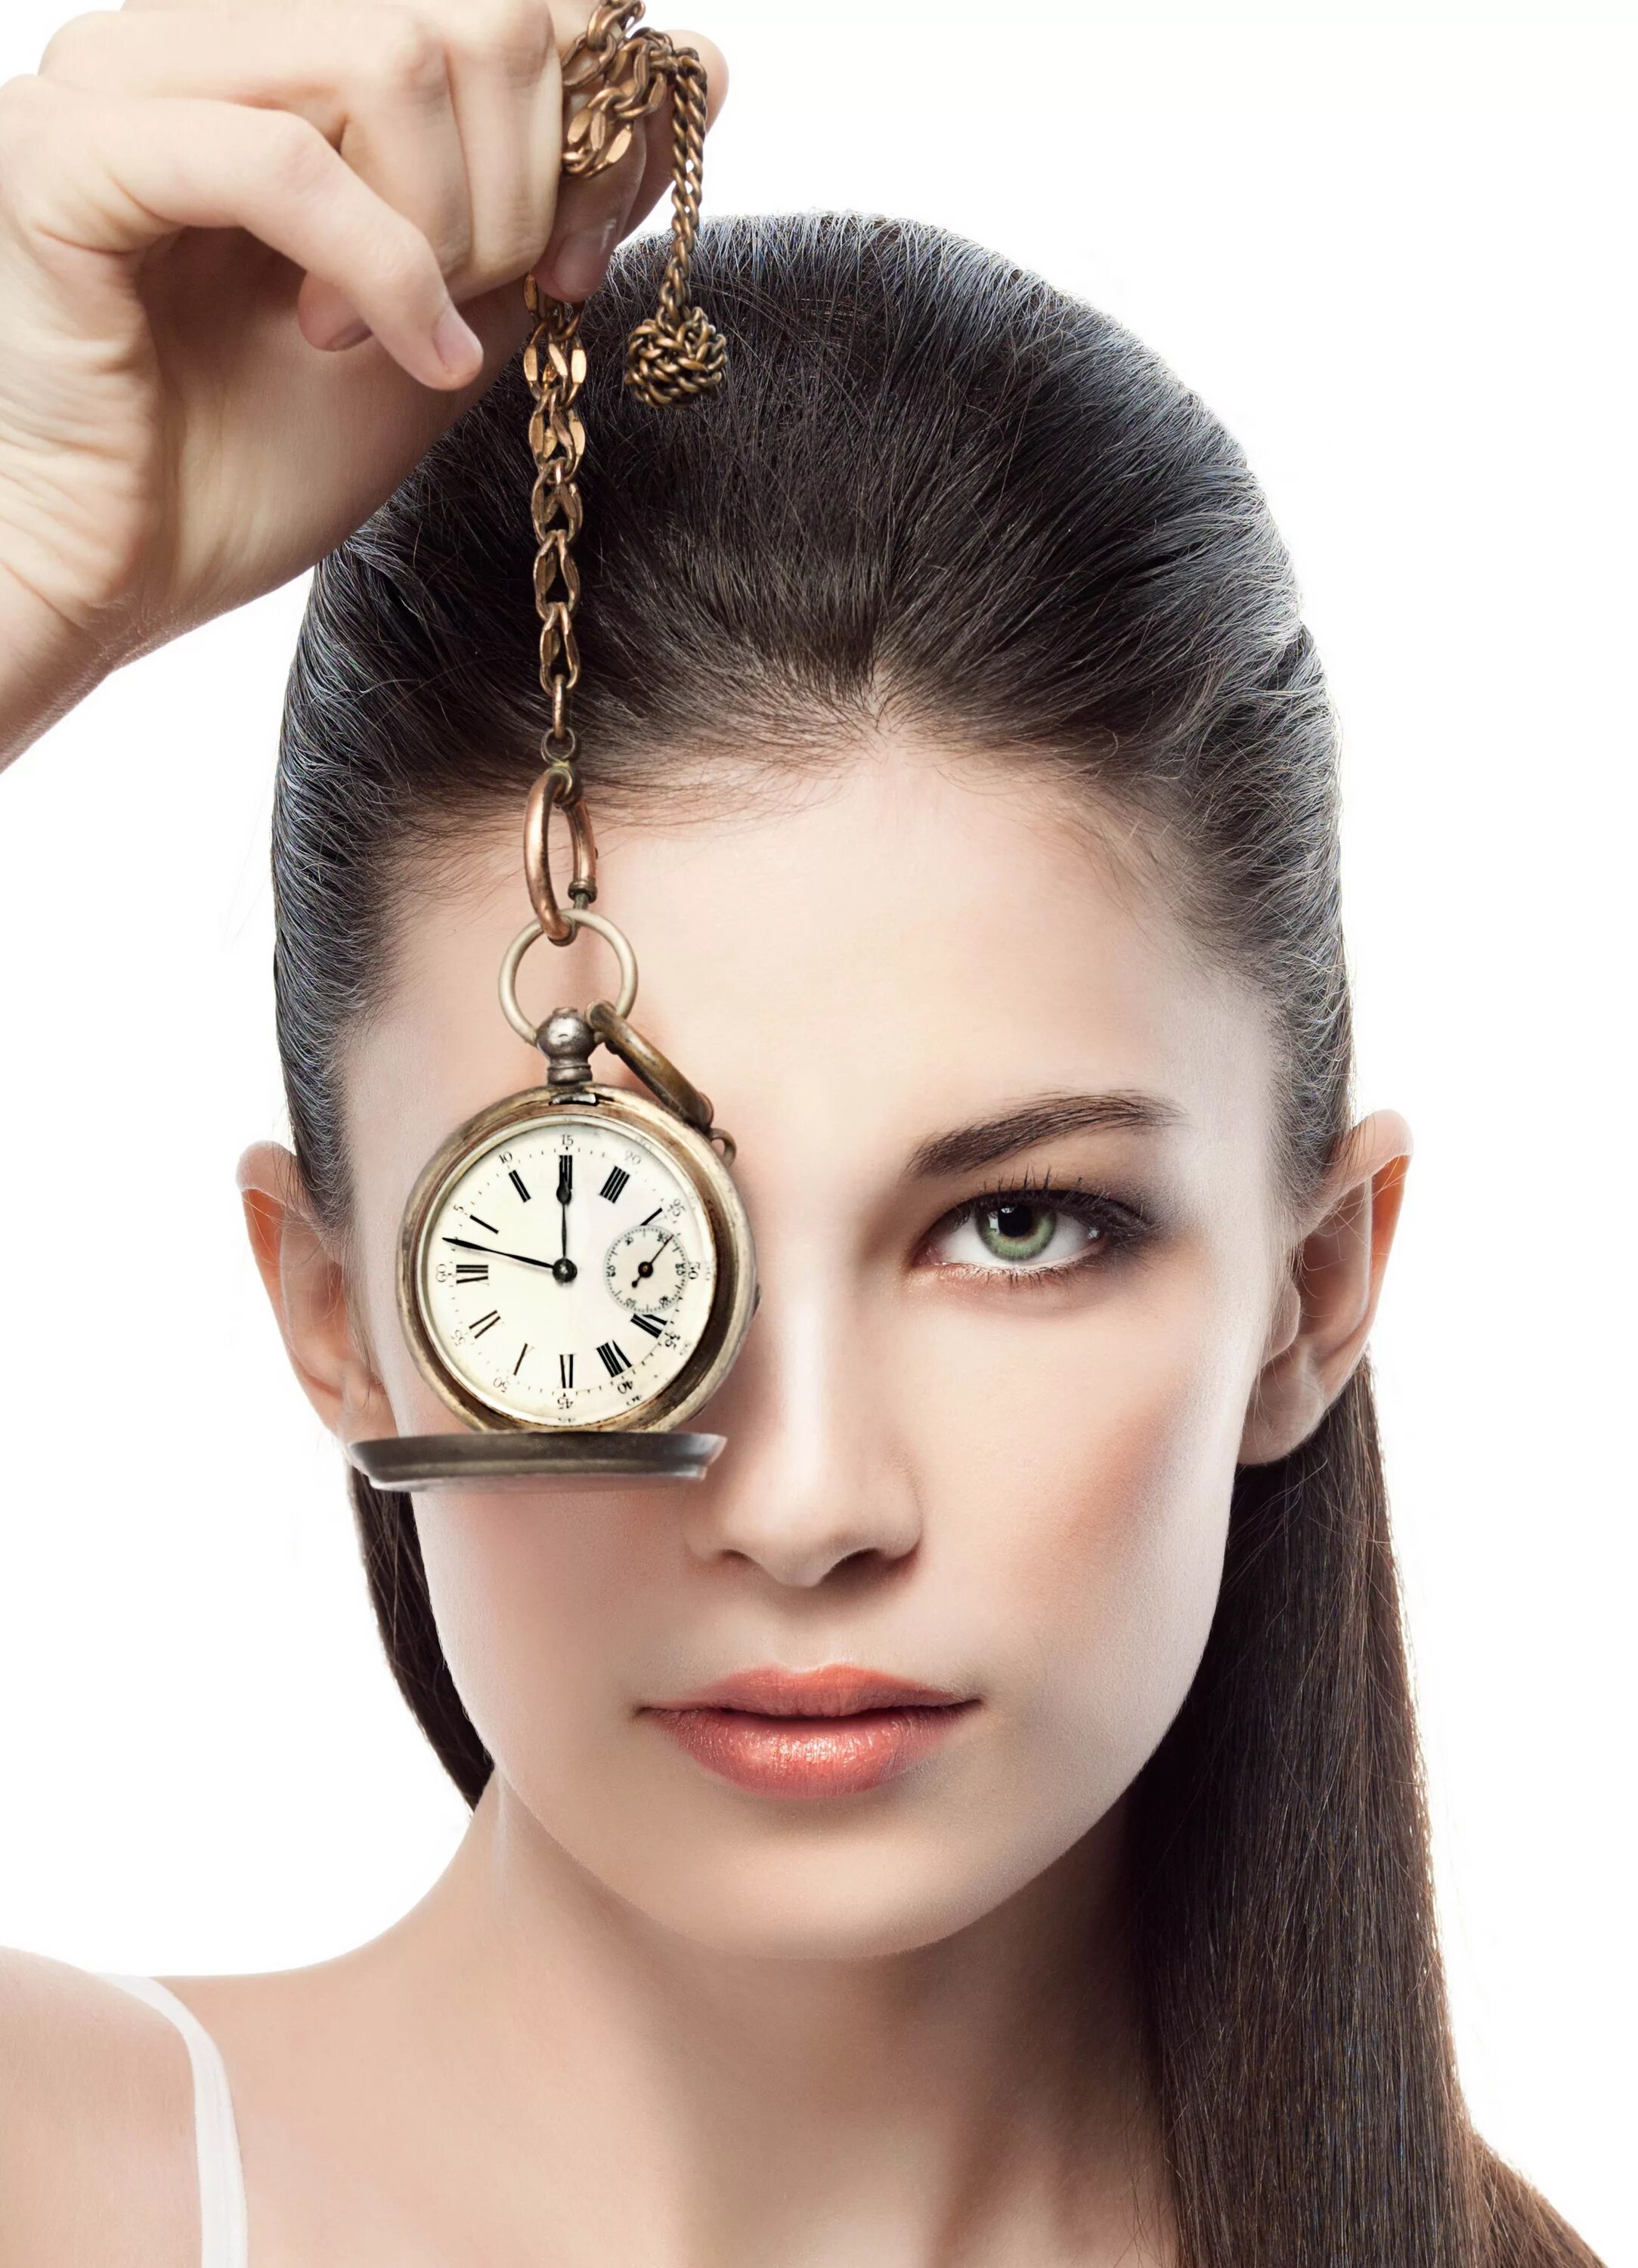 Woman hypnosis. Девушка и часы. Женщина с часами. Фотосессия с часами. Красивая женщина с часами.